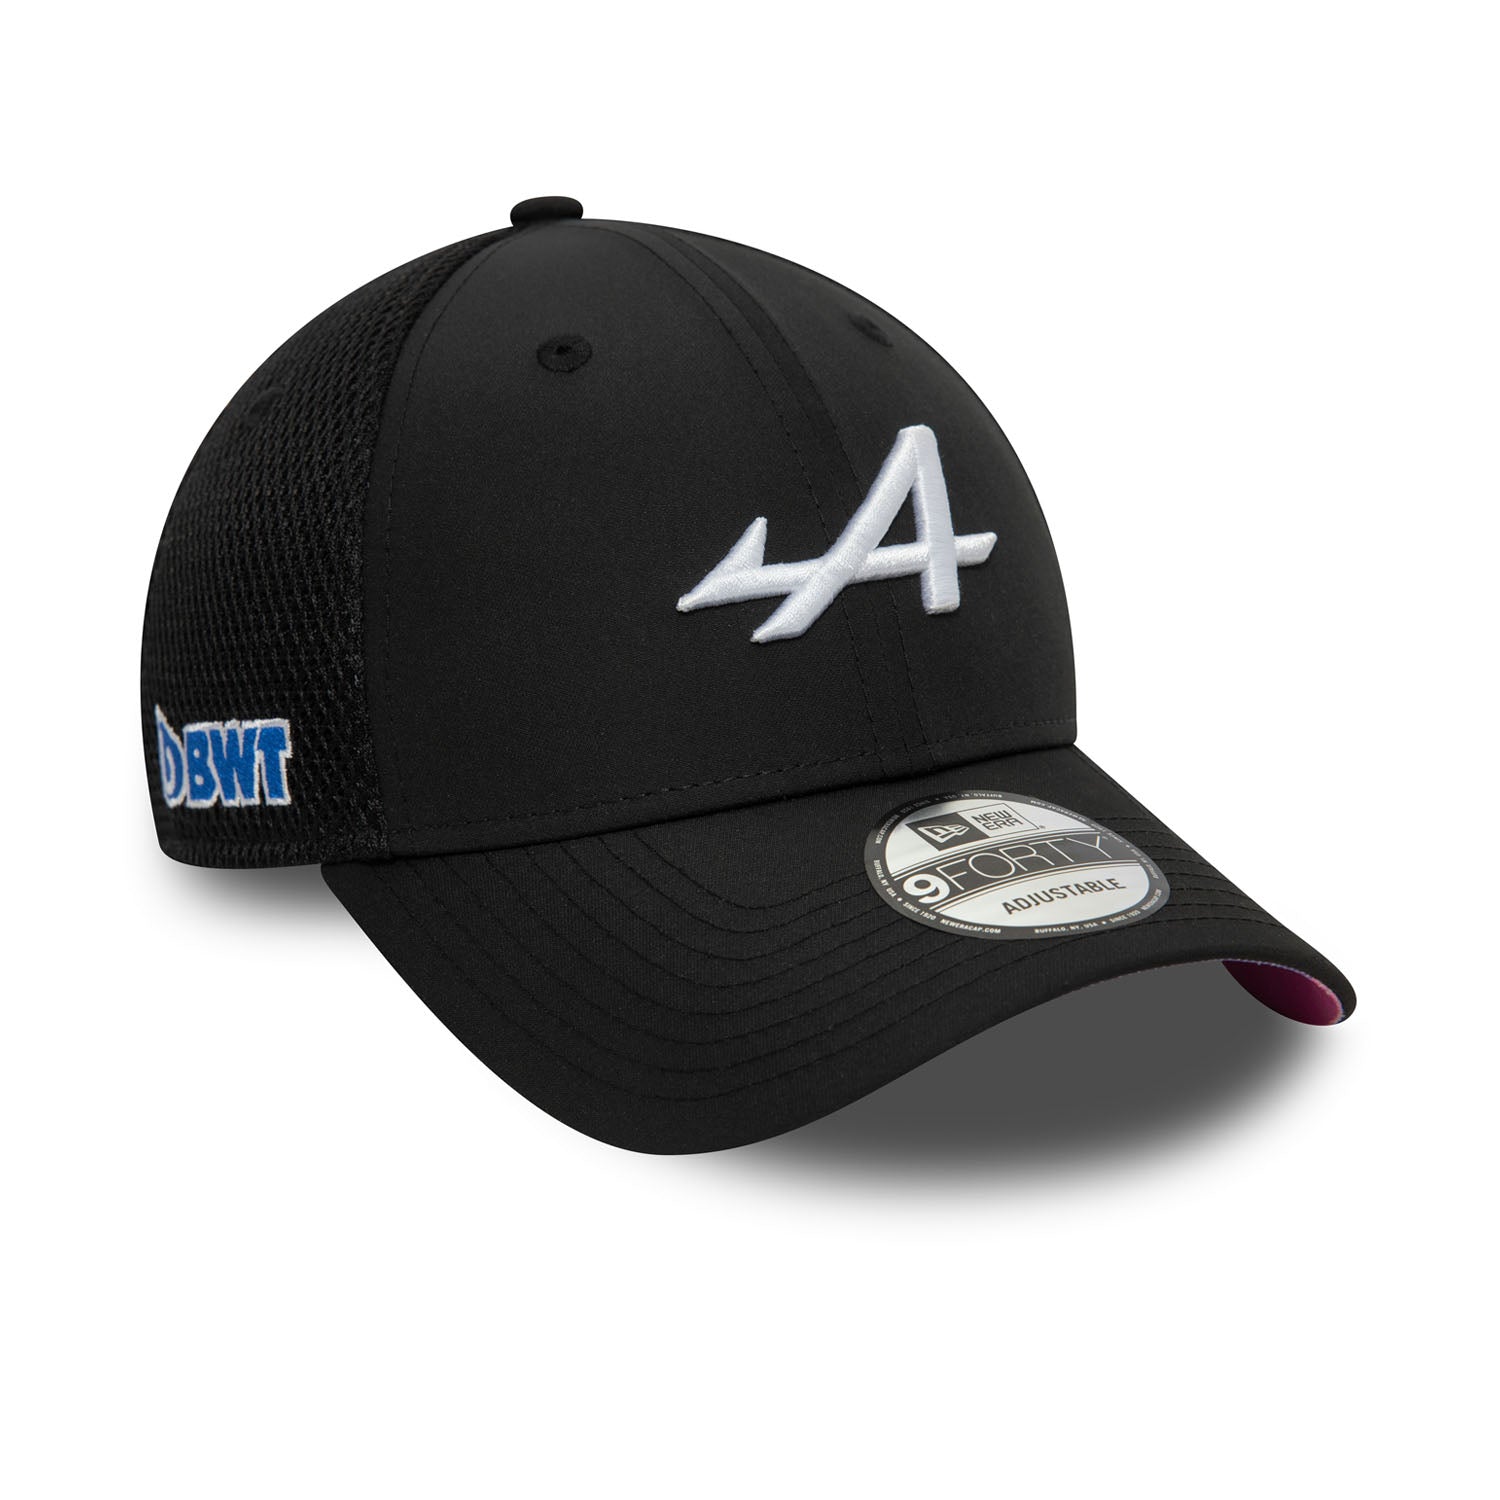 Shop Official Alpine F1™ Merchandise Online | Fueler – Fueler store